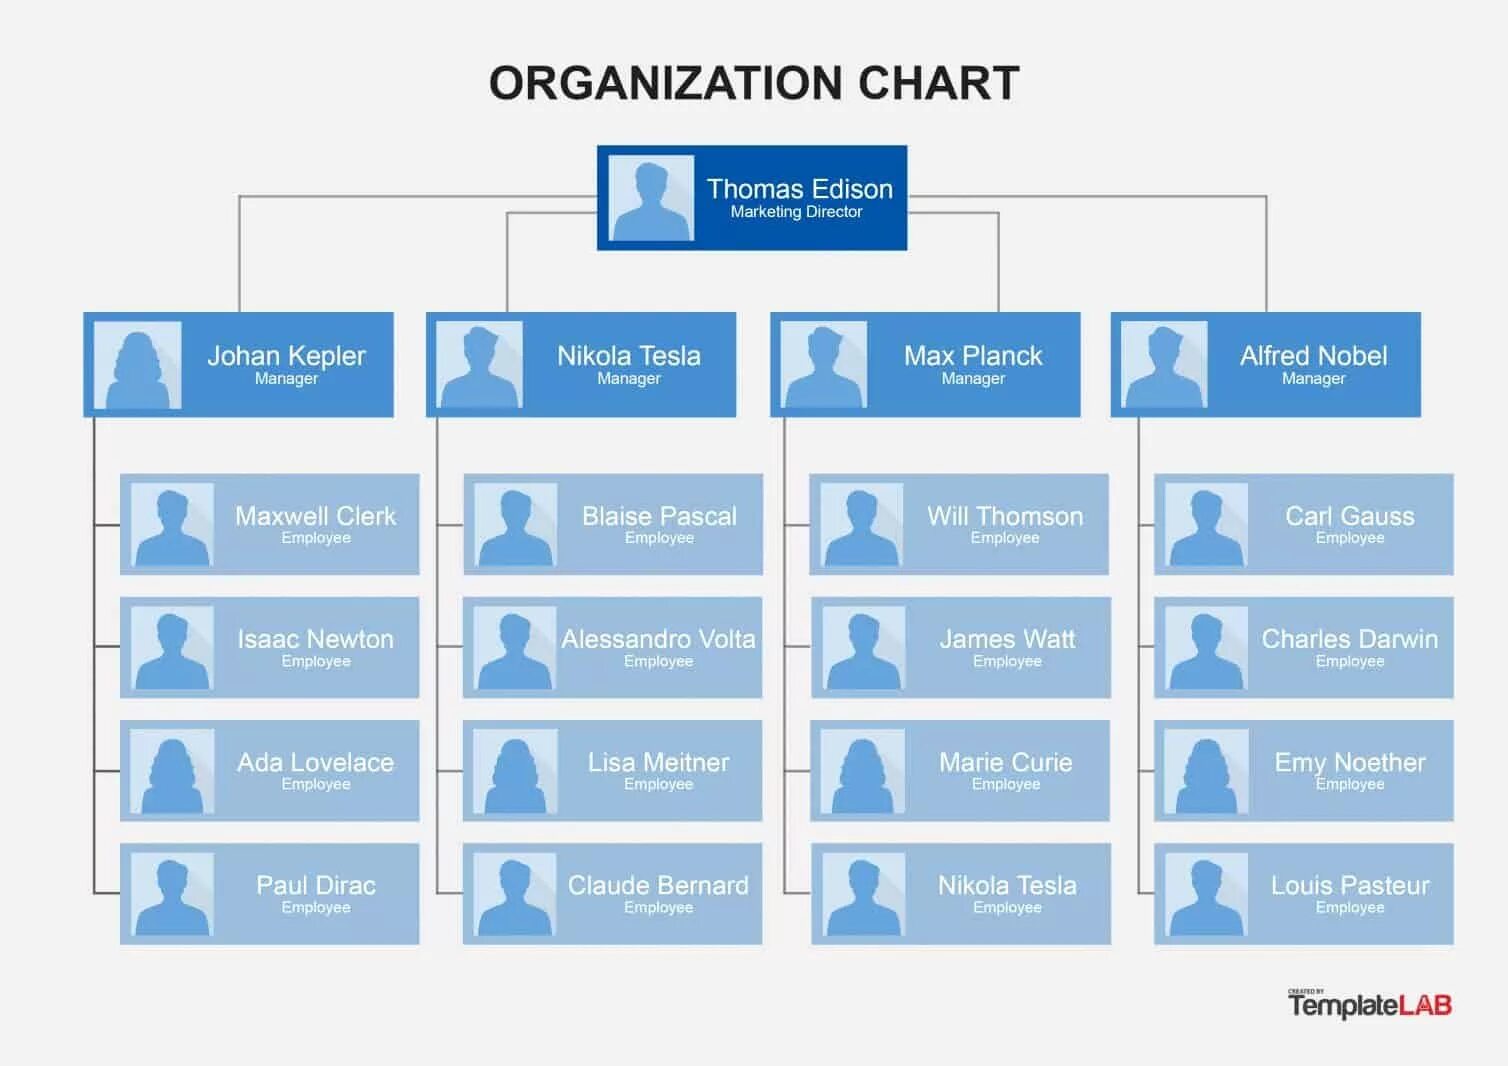 Organization Chart. Организационный чарт. Org Chart шаблон. Организационная диаграмма. Marketing organization